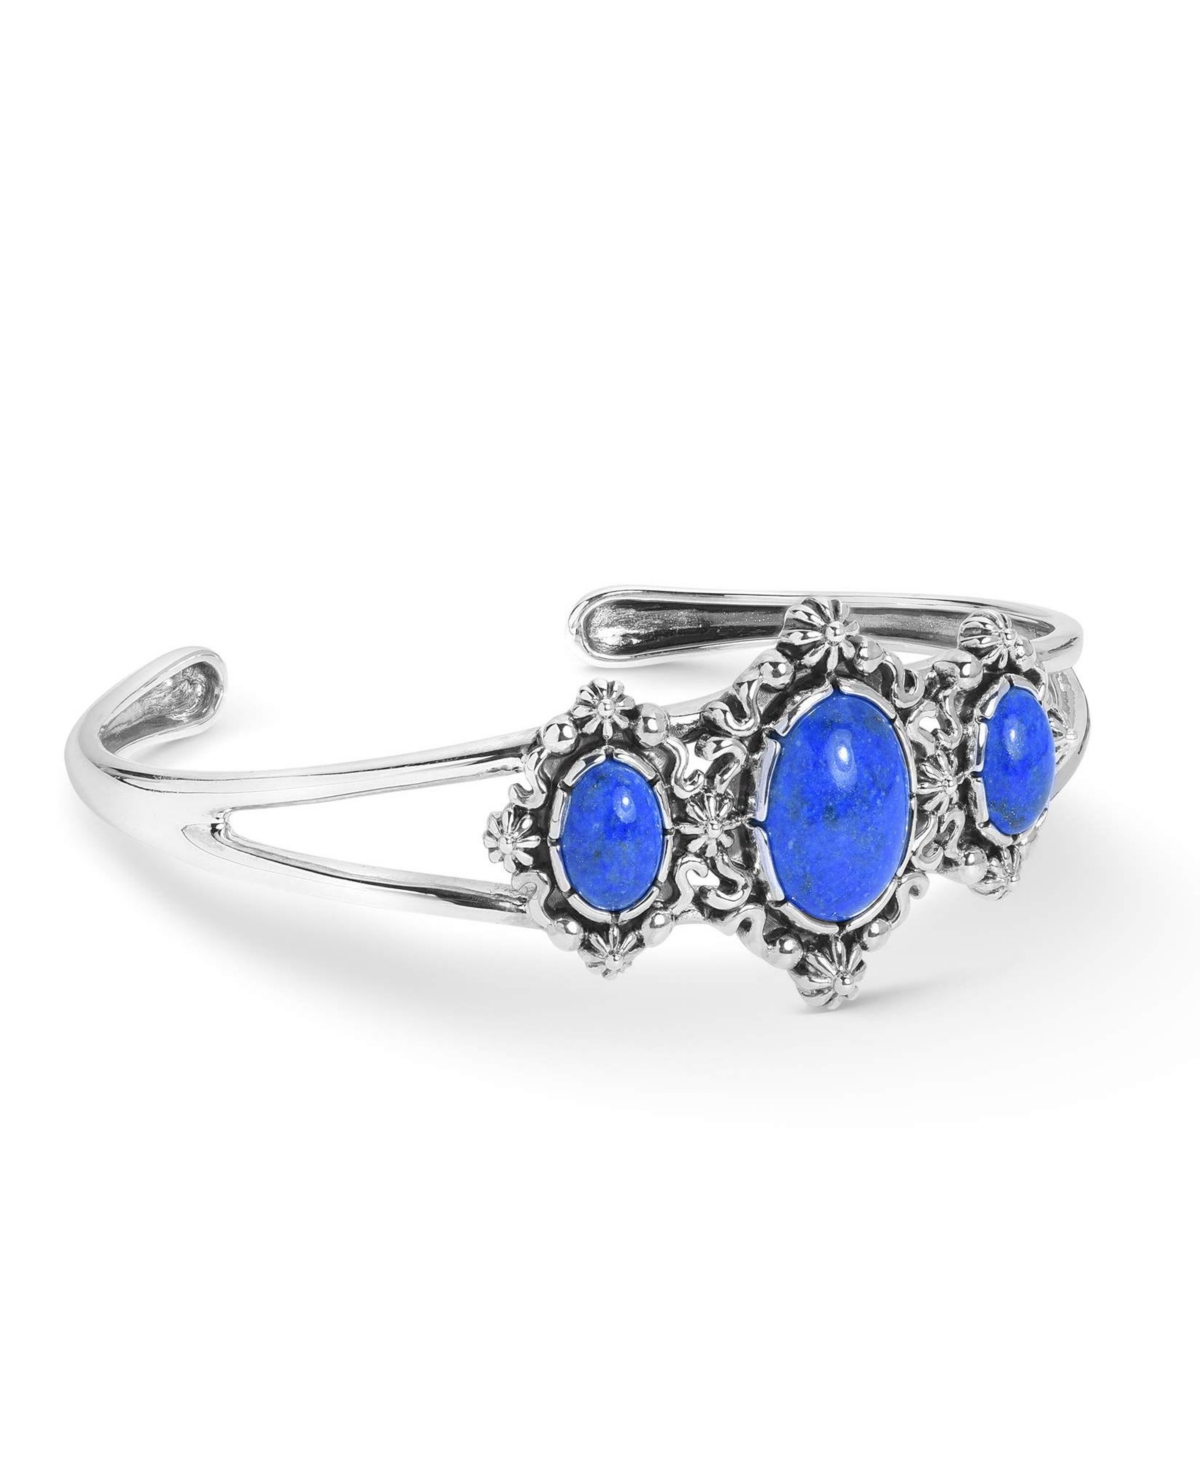 Sterling Silver Women's Cuff Bracelet Denim Lapis Gemstone Size Small - Large - Lapis lazuli